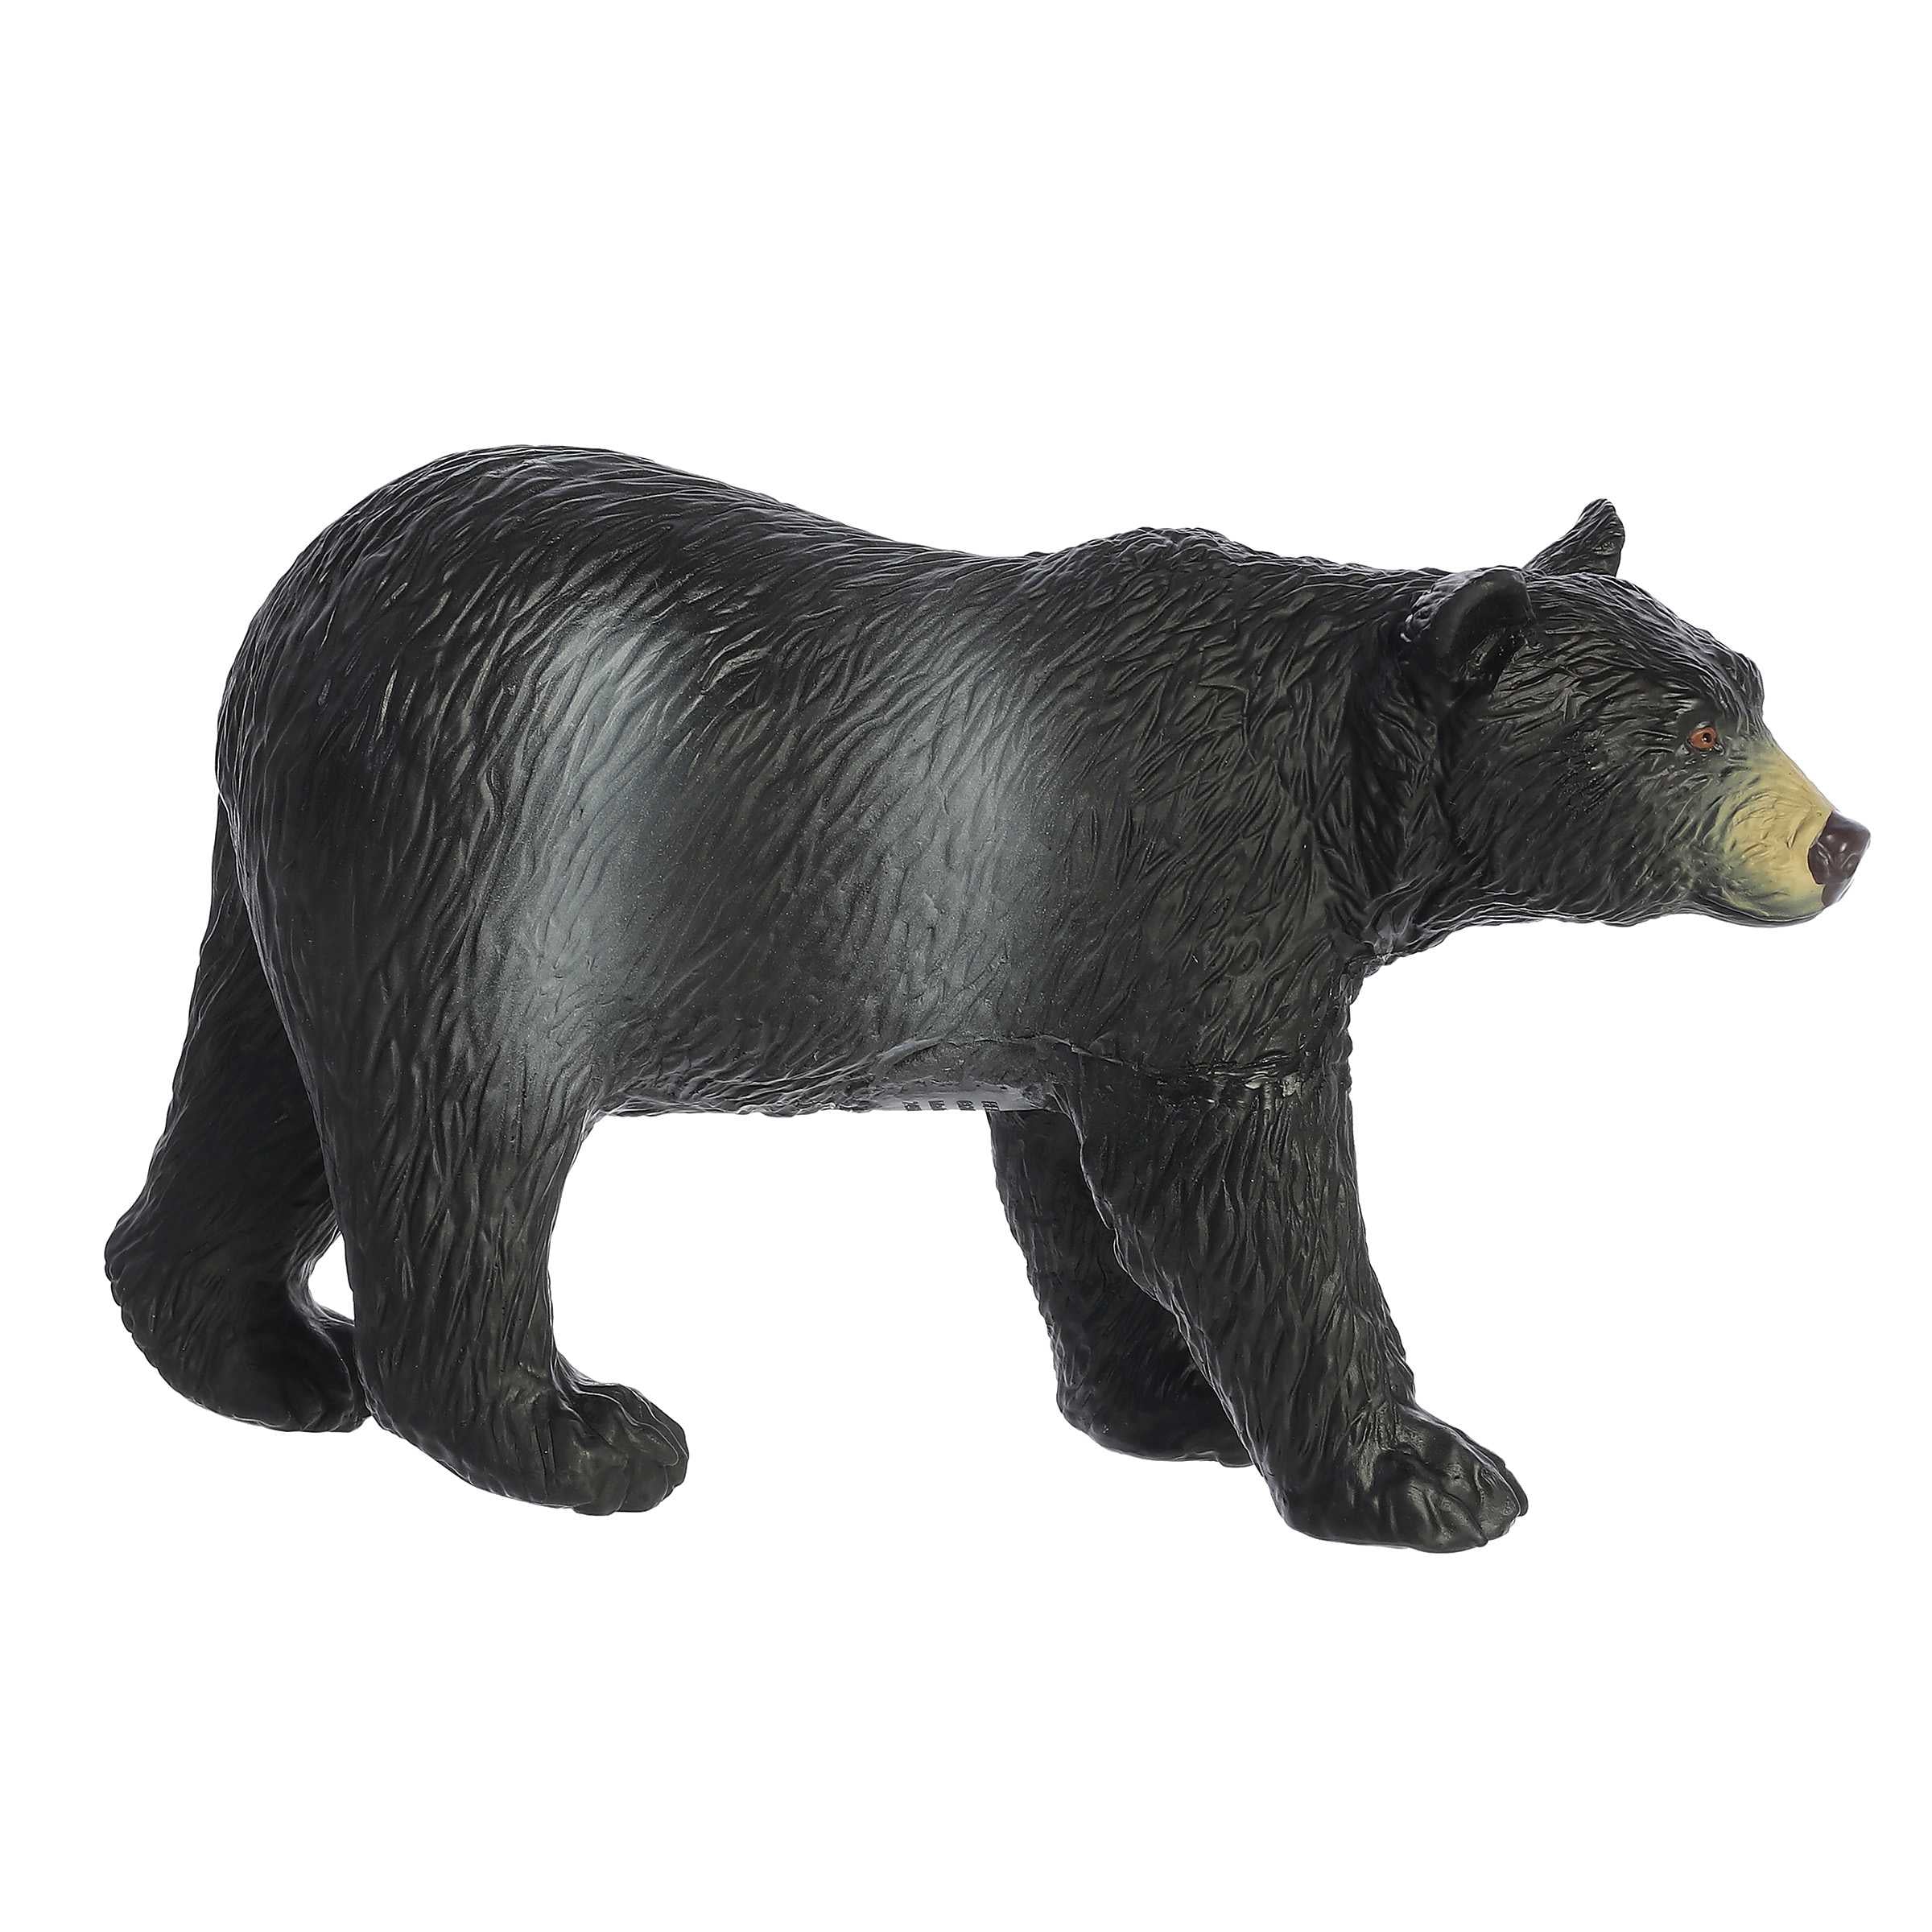 Aurora® Toys - Habitat™ - Black Bear Soft Play Figure